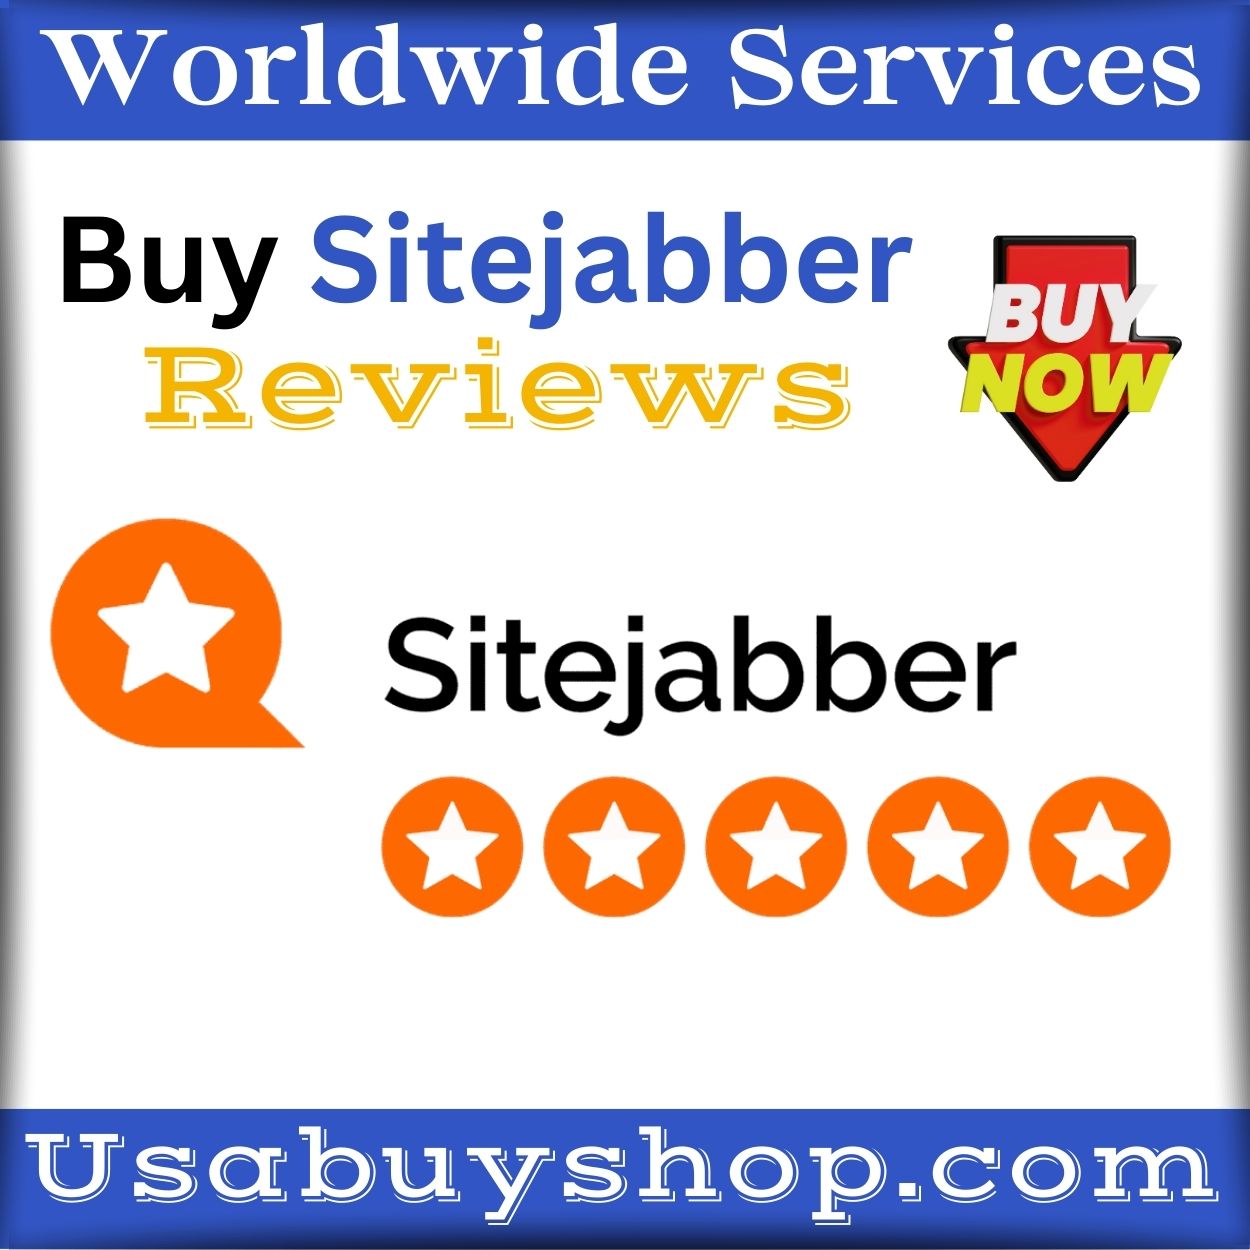 Buy Sitejabber Reviews - 100% Non-Drop 5-star Positive Reviews